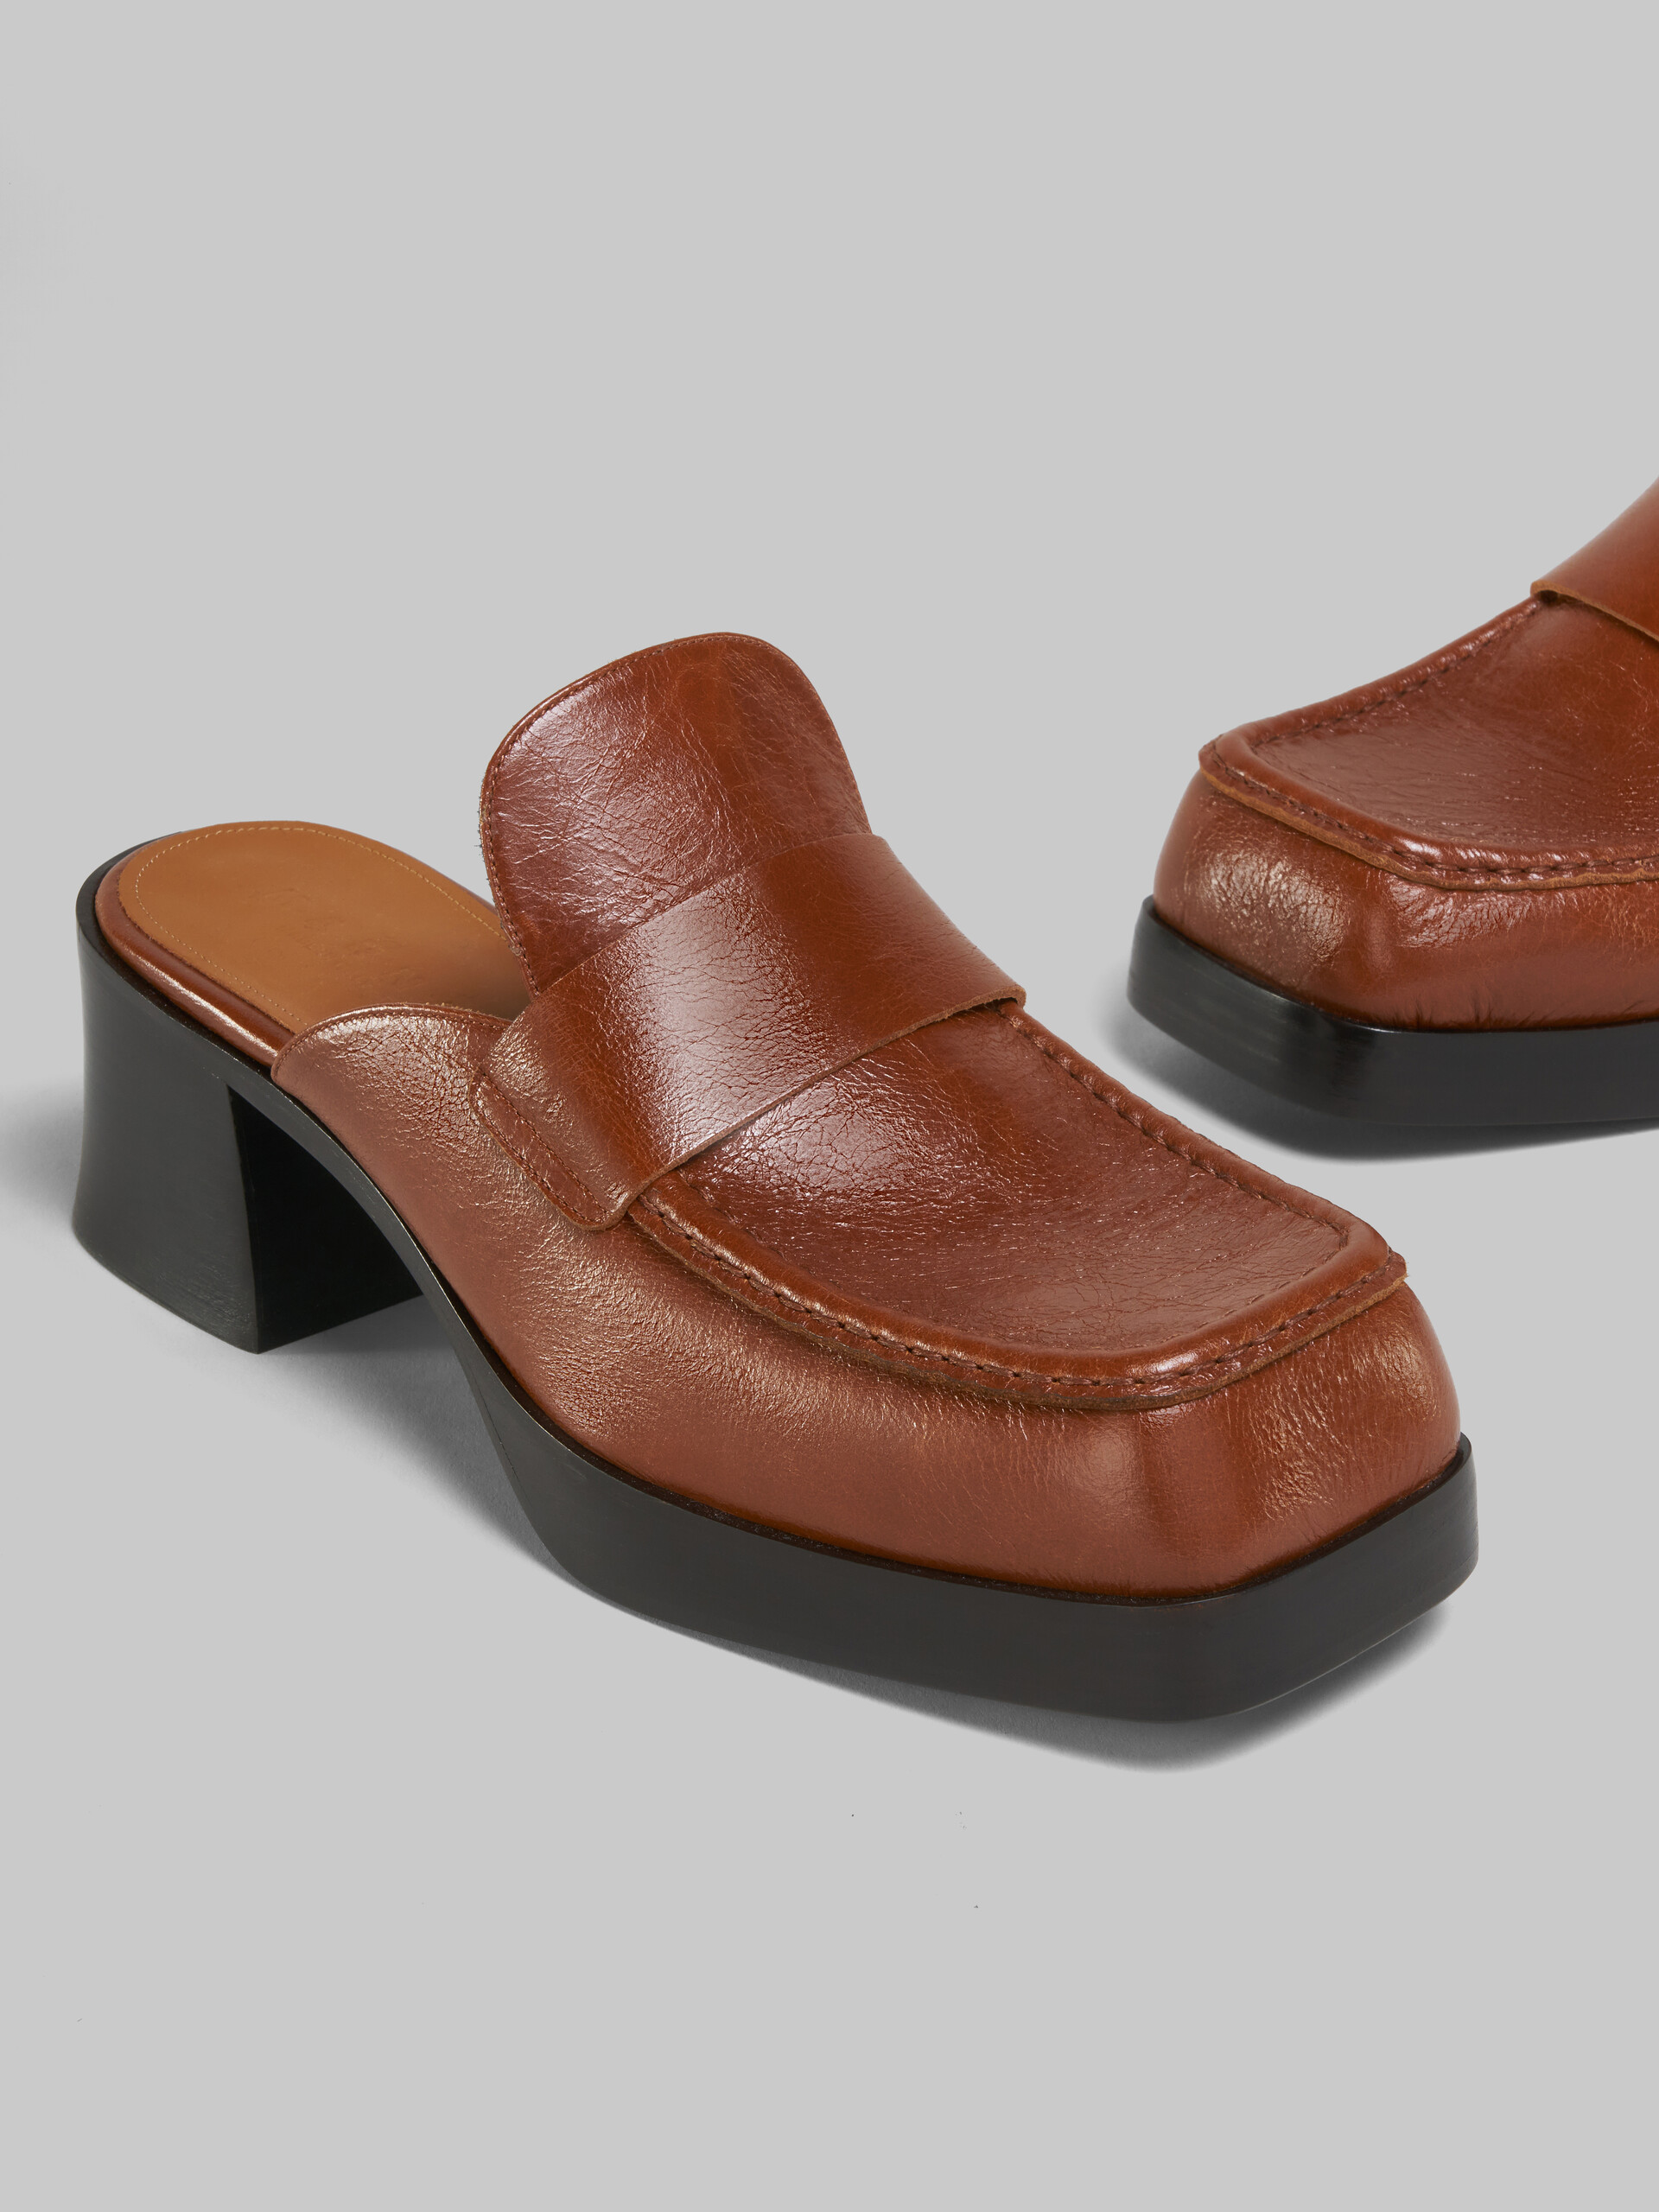 Brown leather heeled mule - Pumps - Image 5